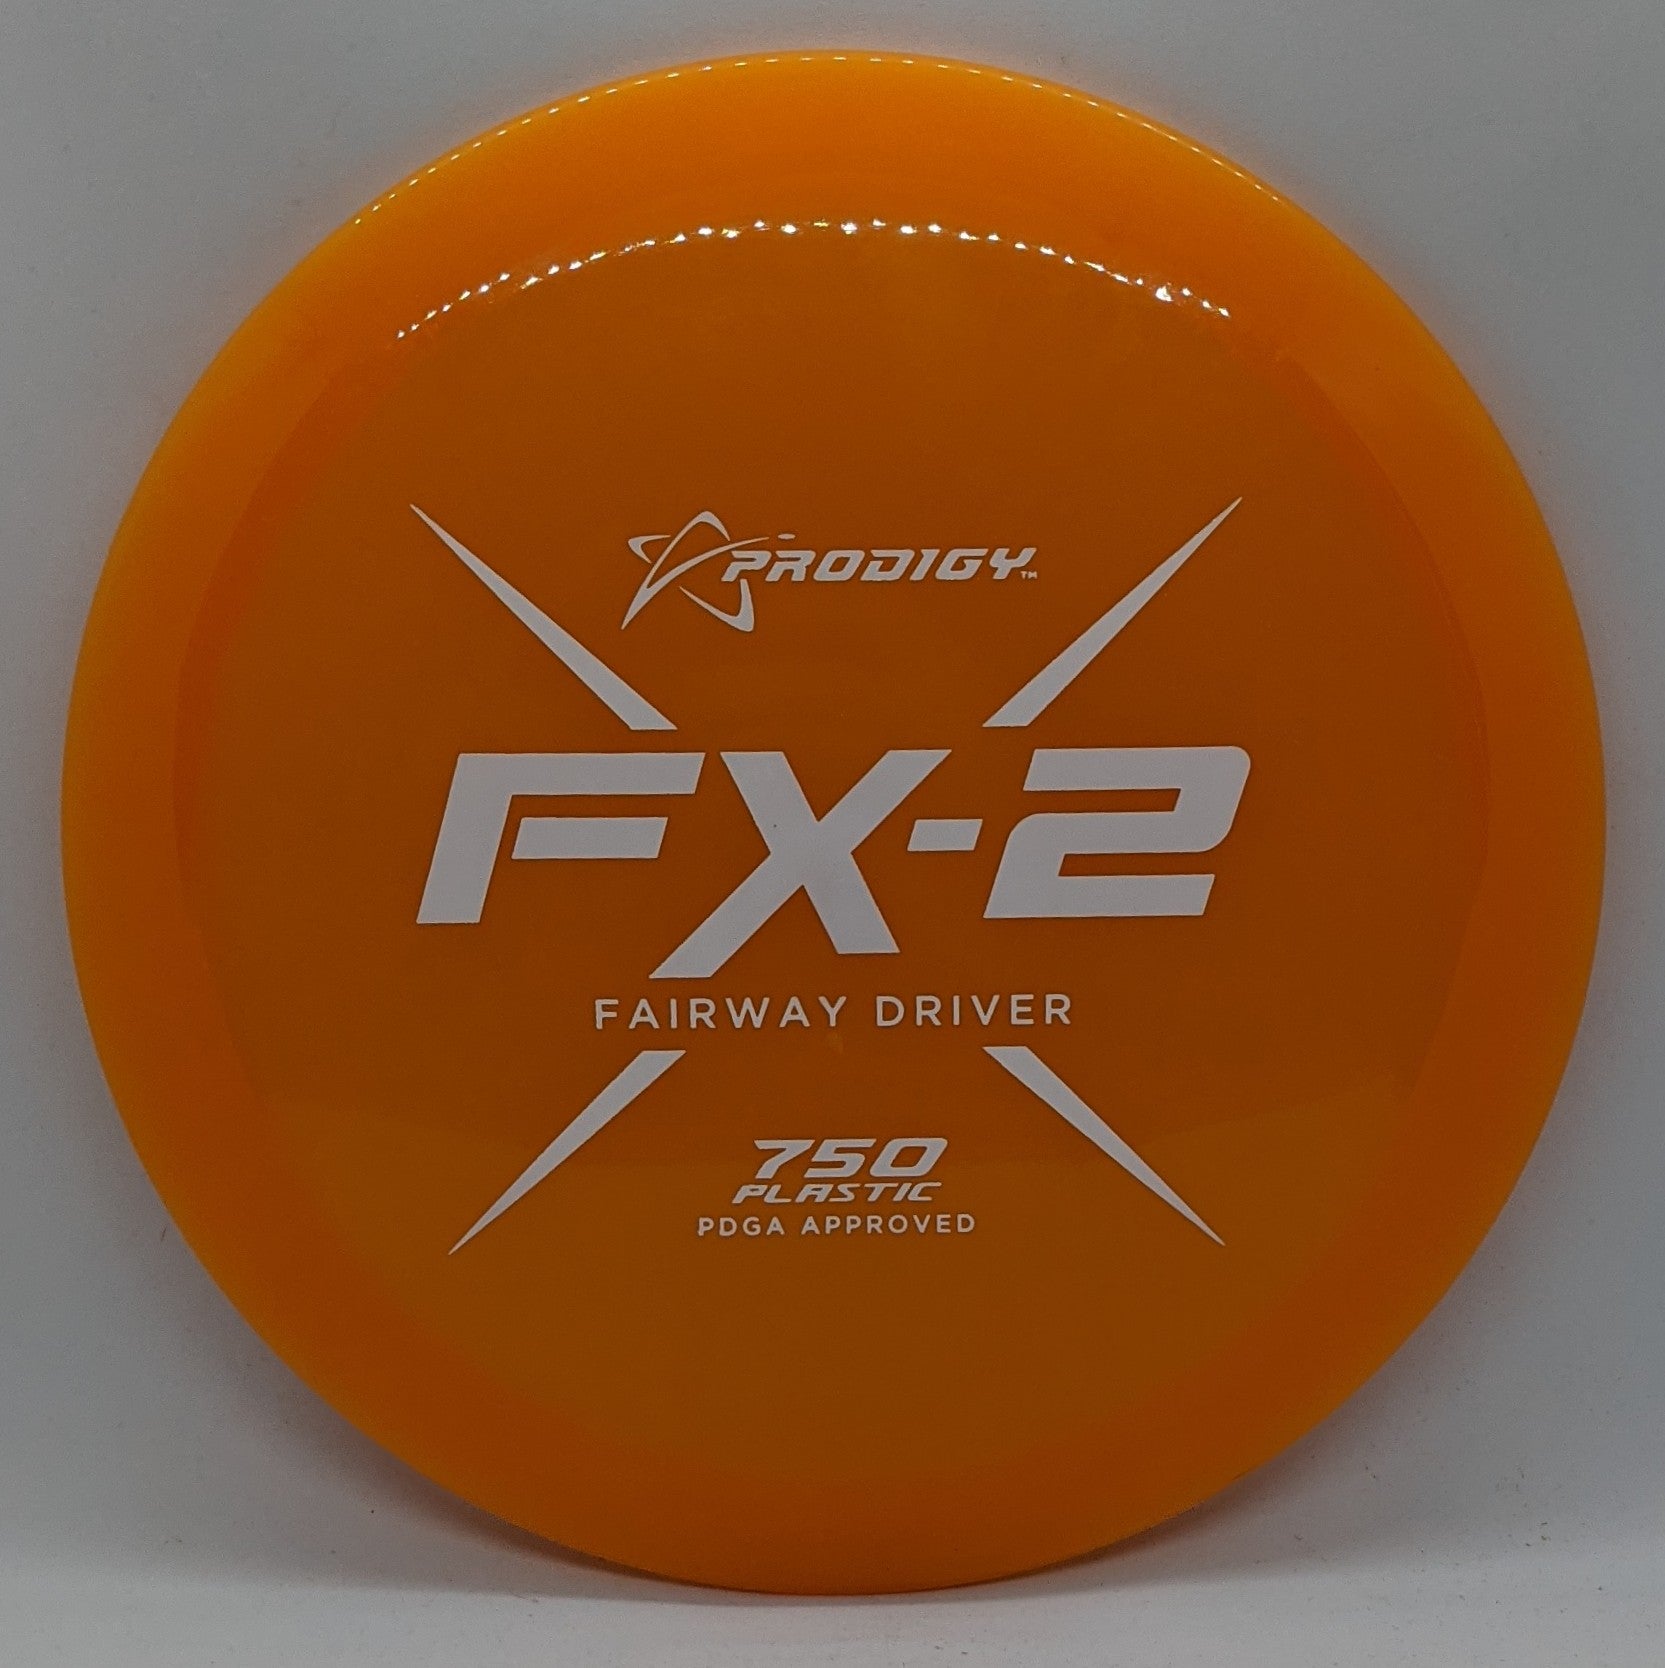 Prodigy FX-2 750